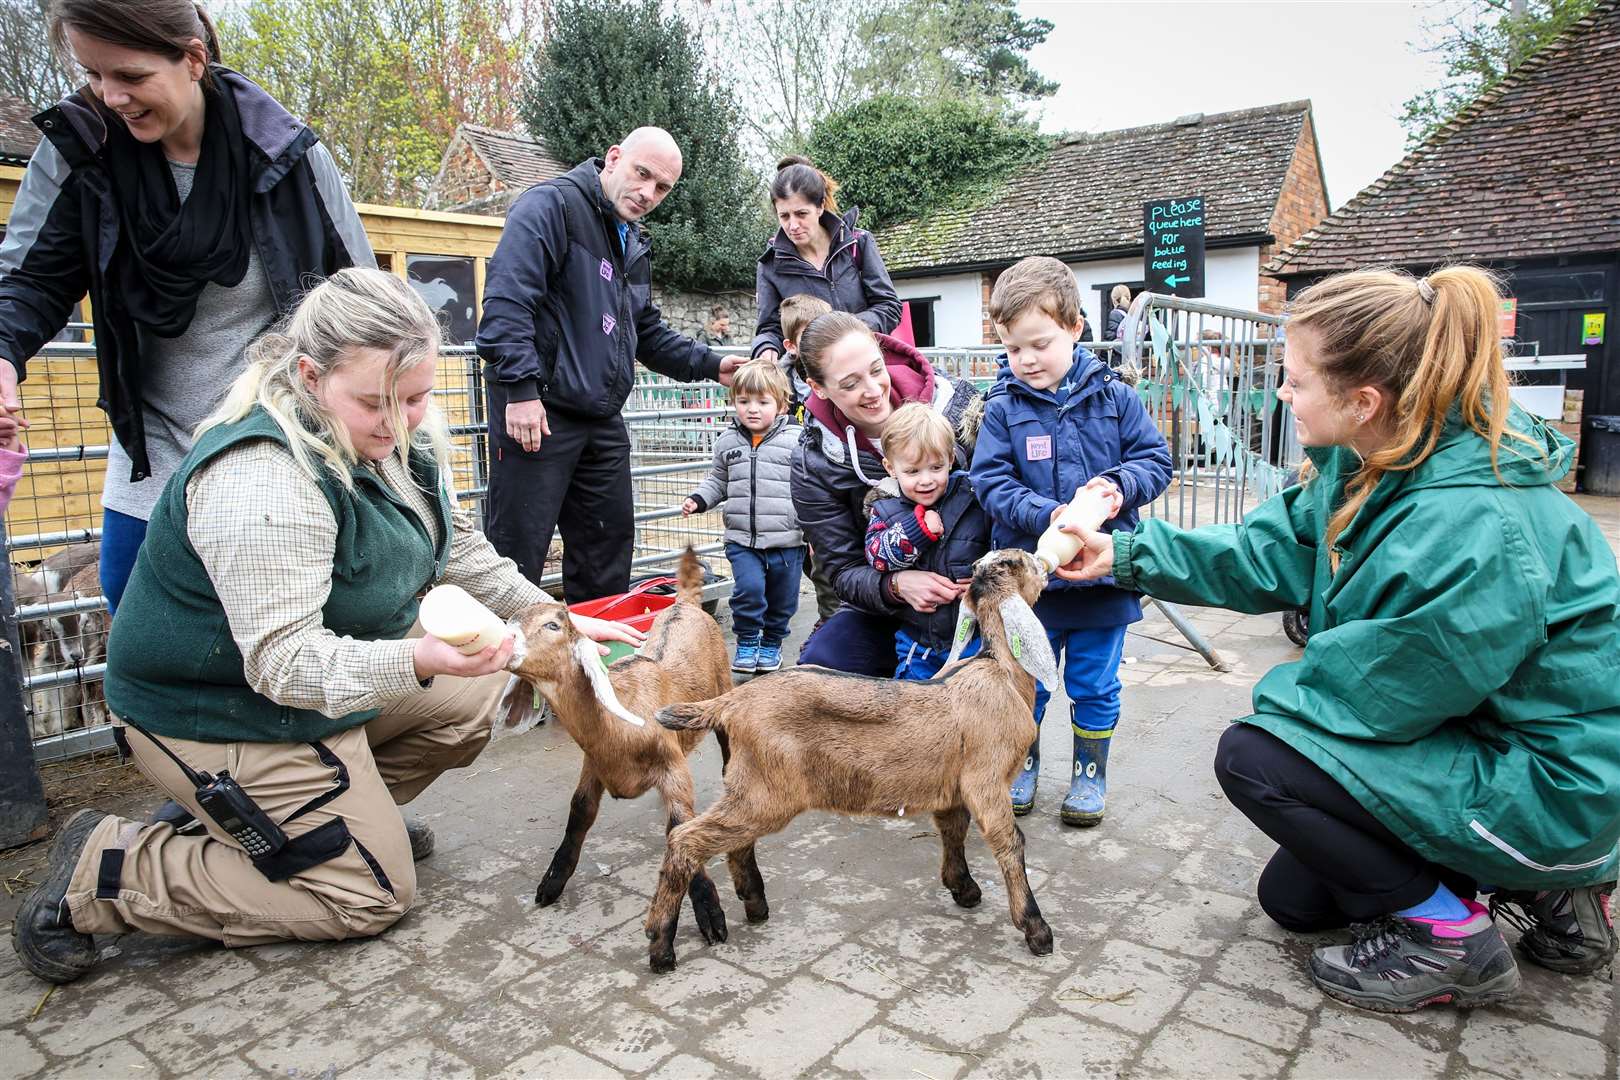 Easter activities at Kent Life include meeting the animals. Picture: Matthew Walker